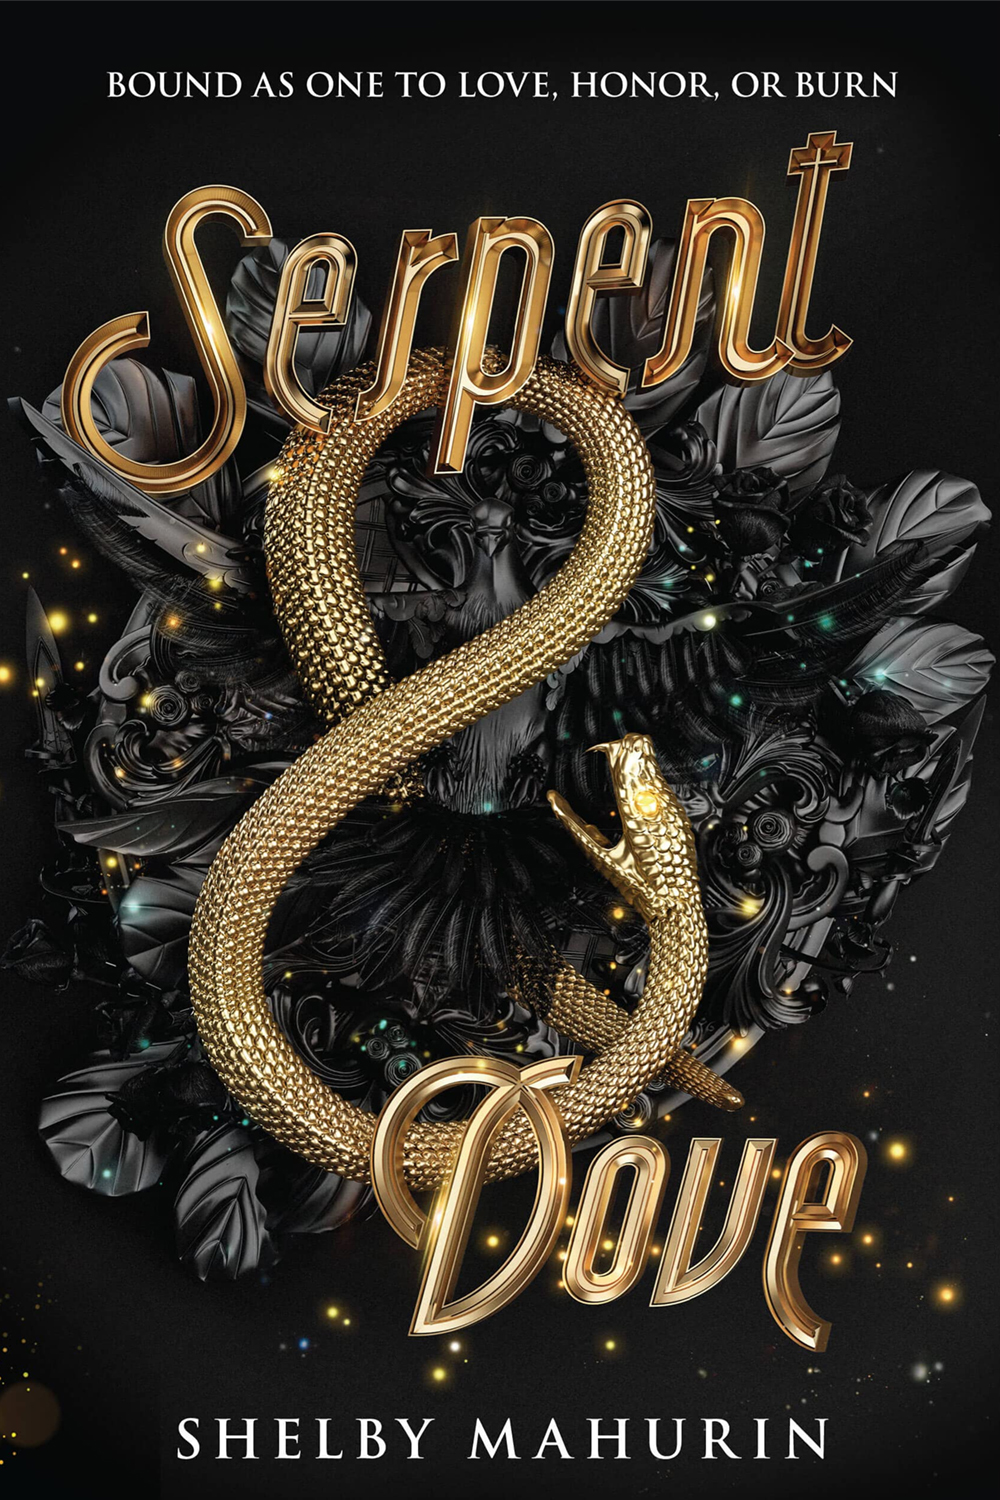 S1 E23 Serpent & Dove by Shelby Mahurin